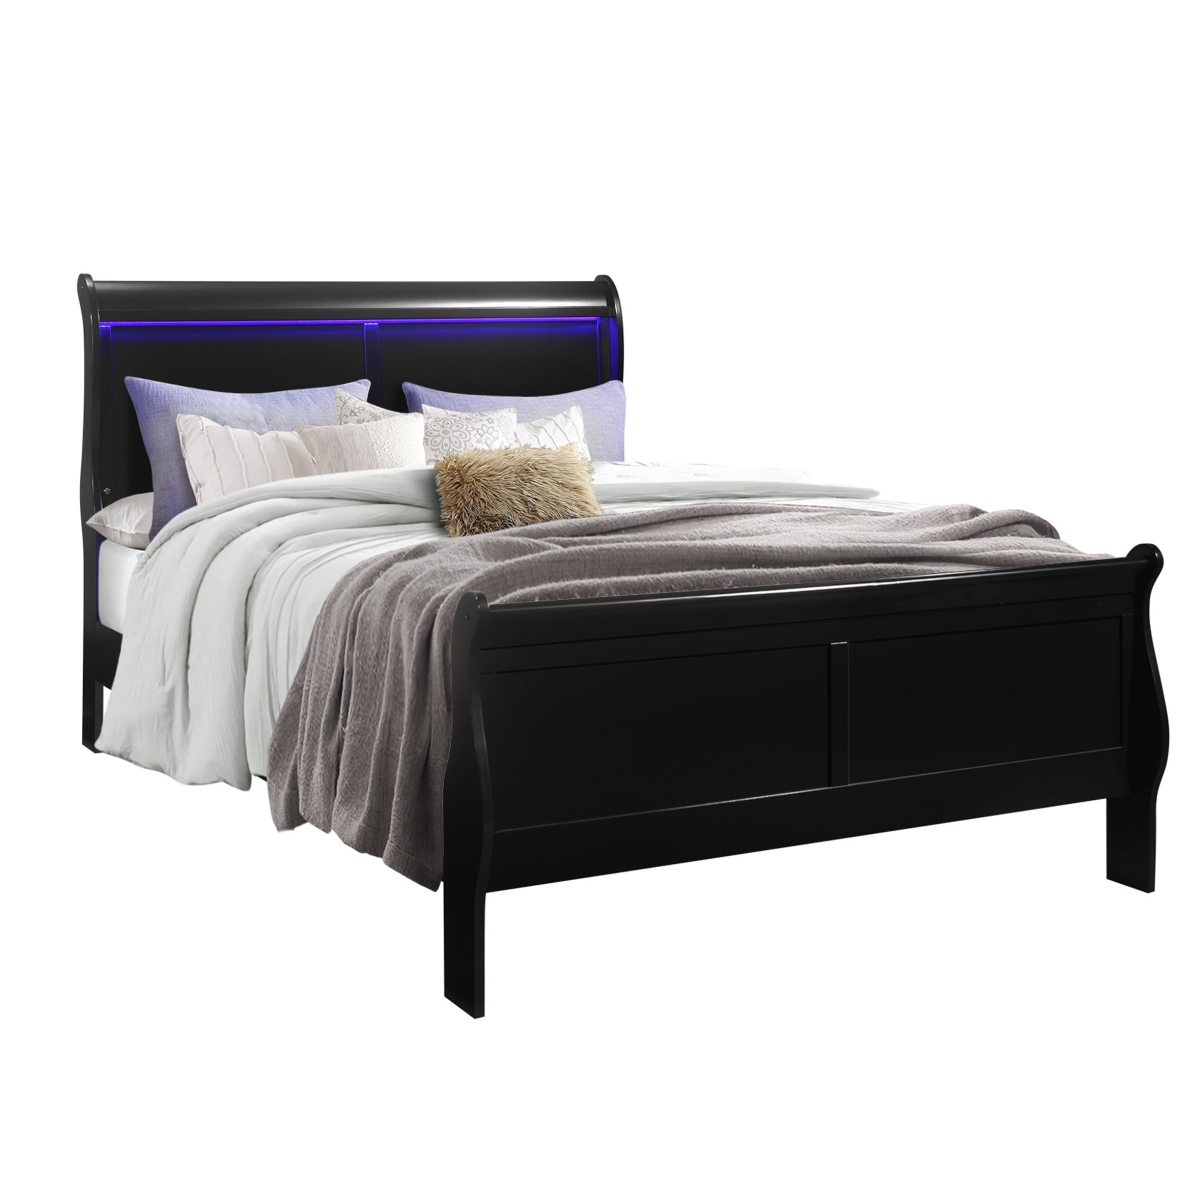 CHARLIE-BLACK-QB Charlie Bed, Black - Queen Size -  Global Furniture USA